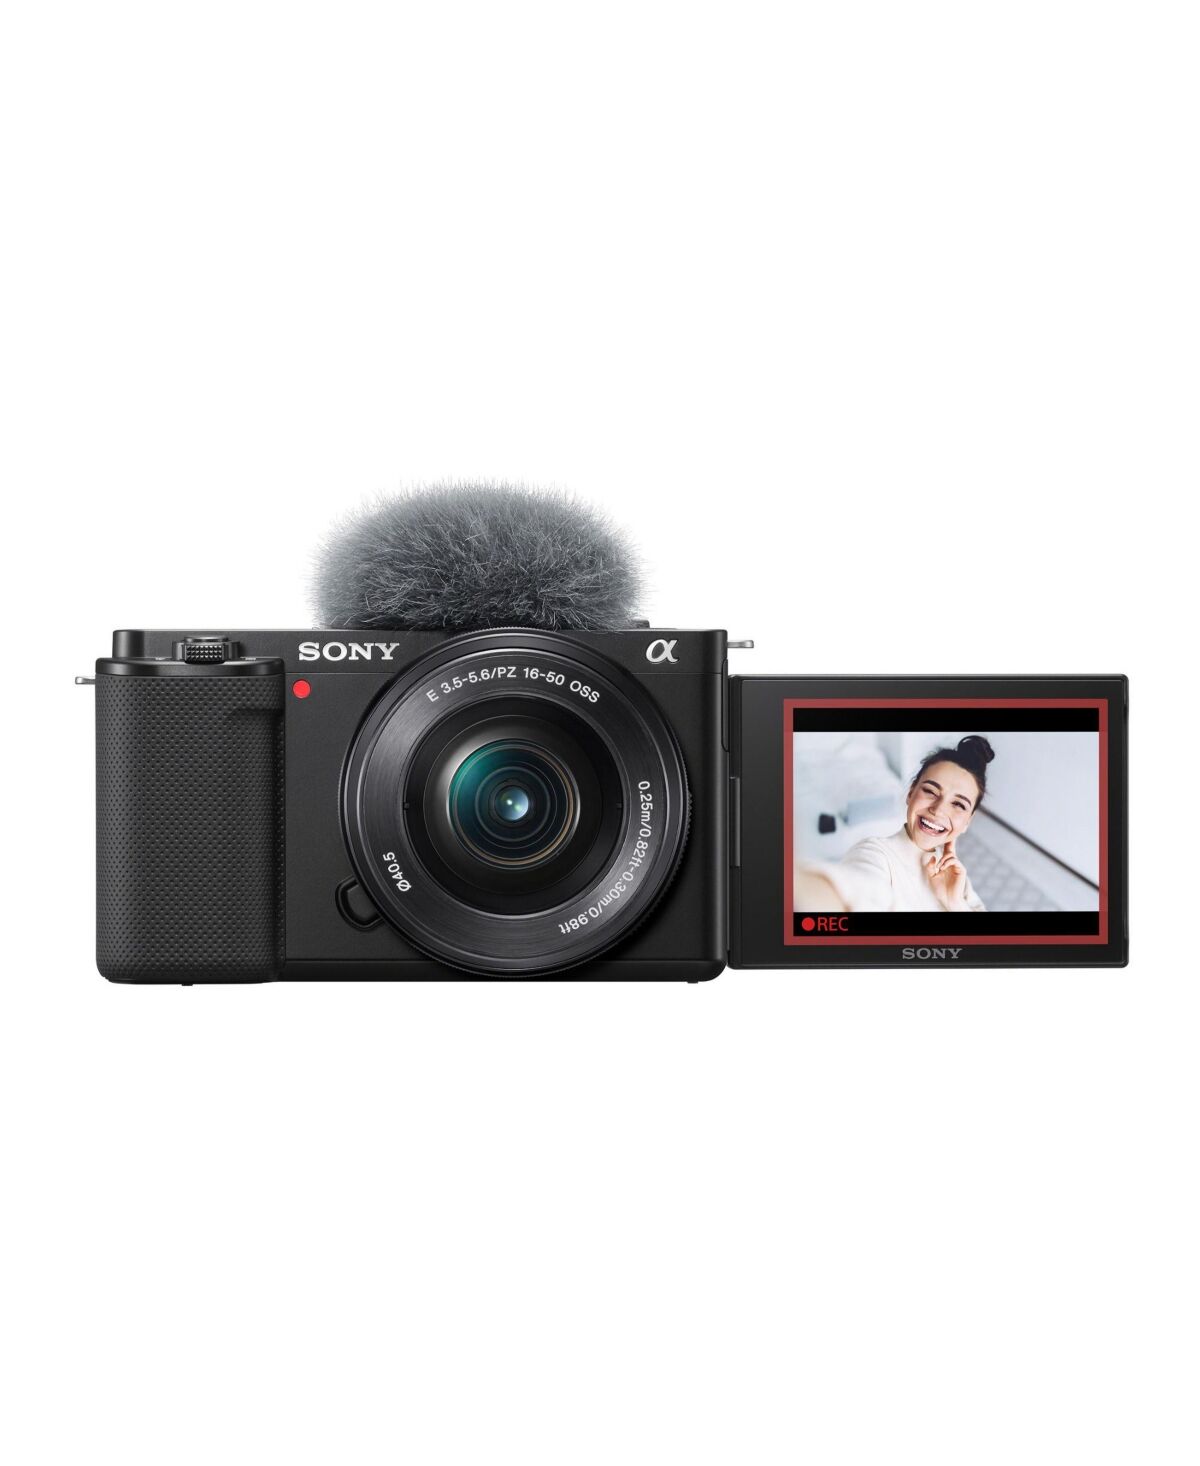 Sony Alpha Zv-E10 Aps-c Mirror less Vlog Camera with 16-50mm Lens (Black) - Black